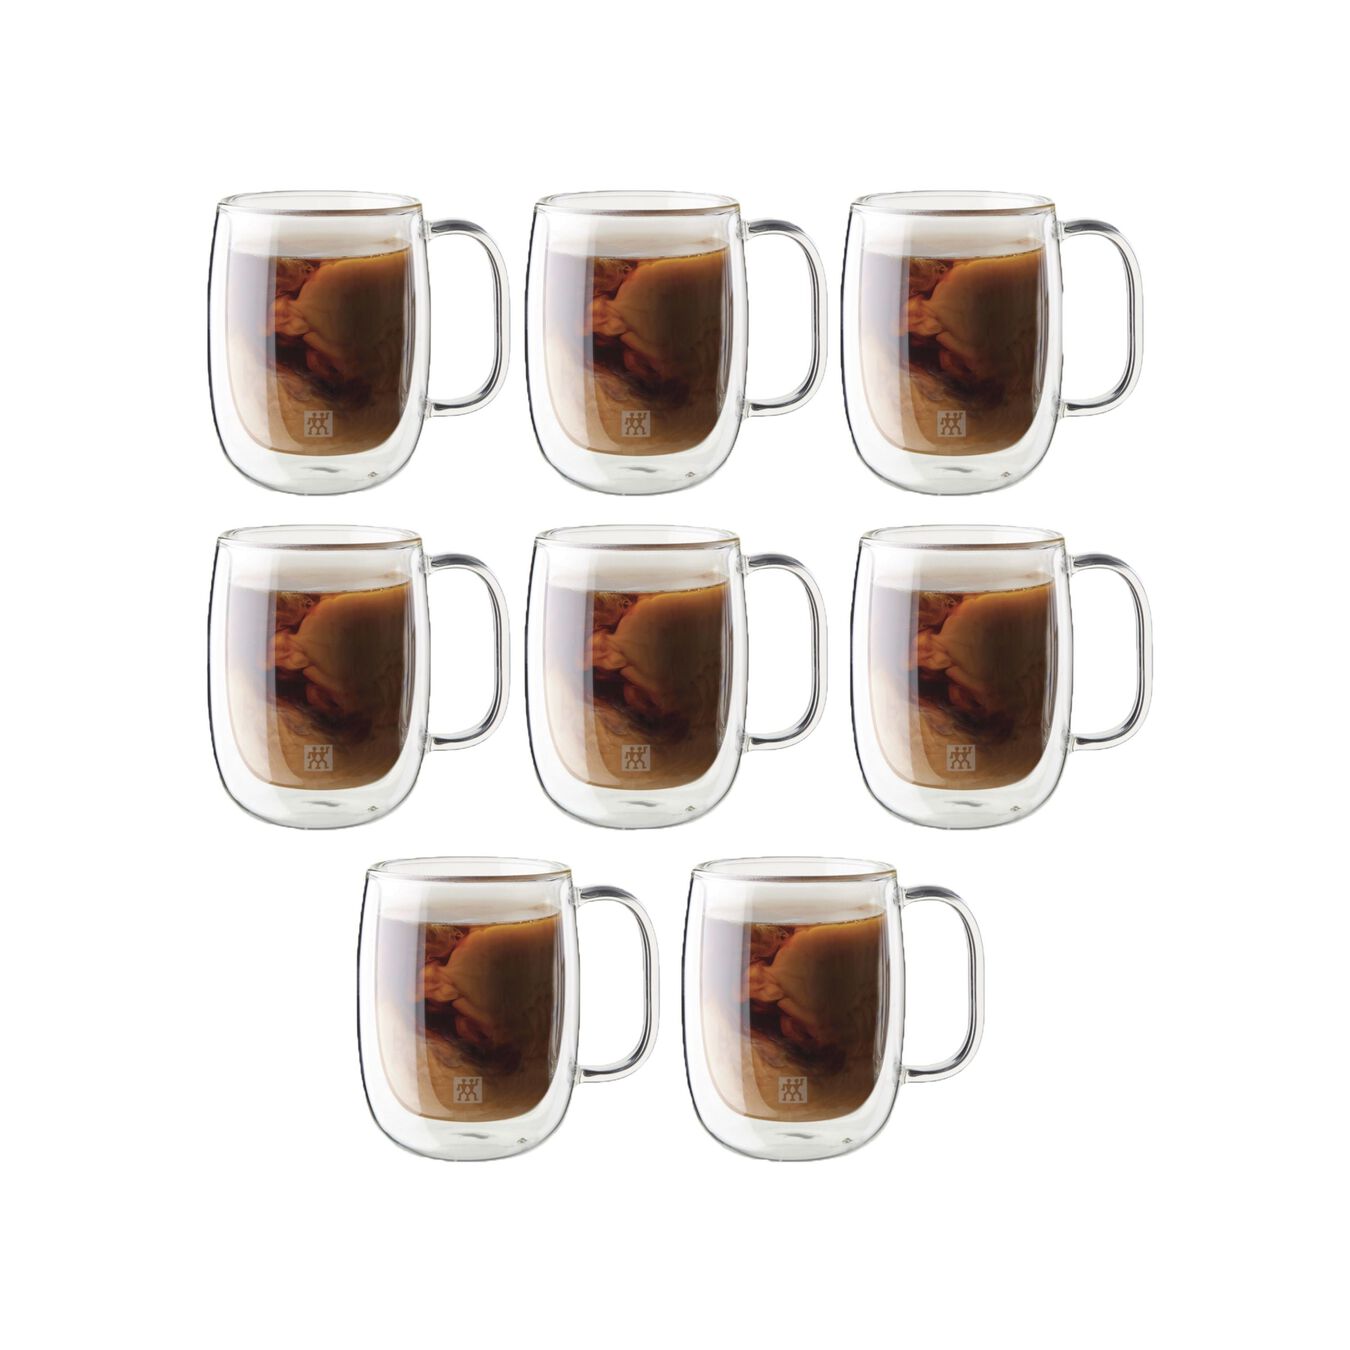 8 Piece Coffee Mug Set - Value Pack,,large 1